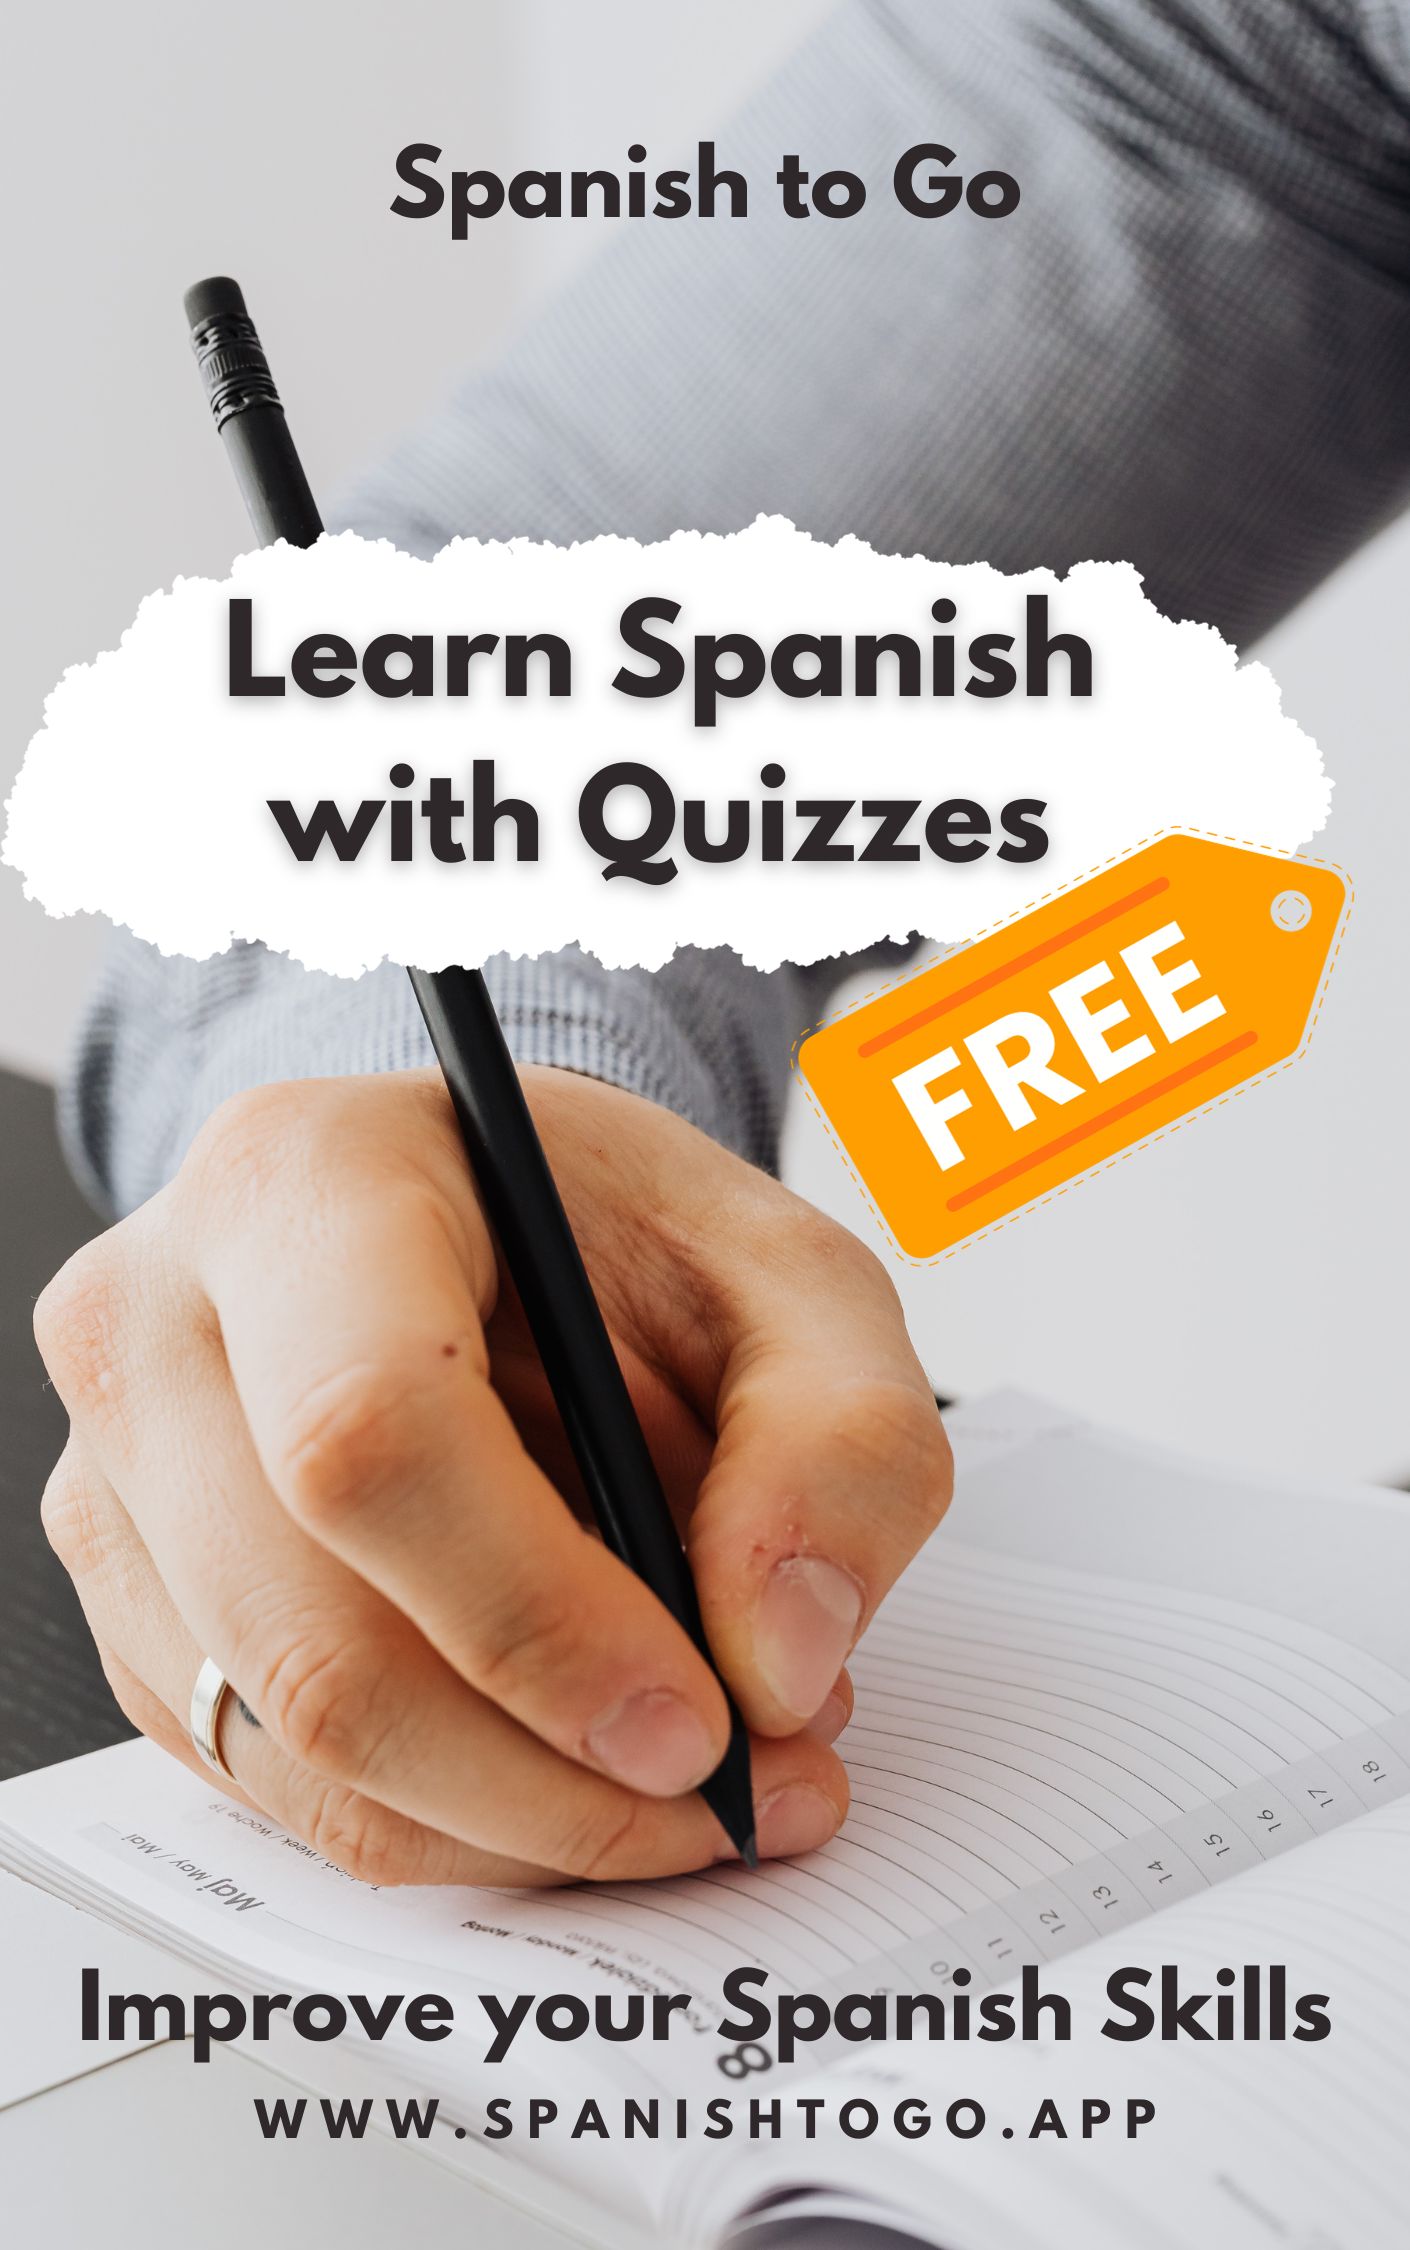 Improve your Spanish Skills